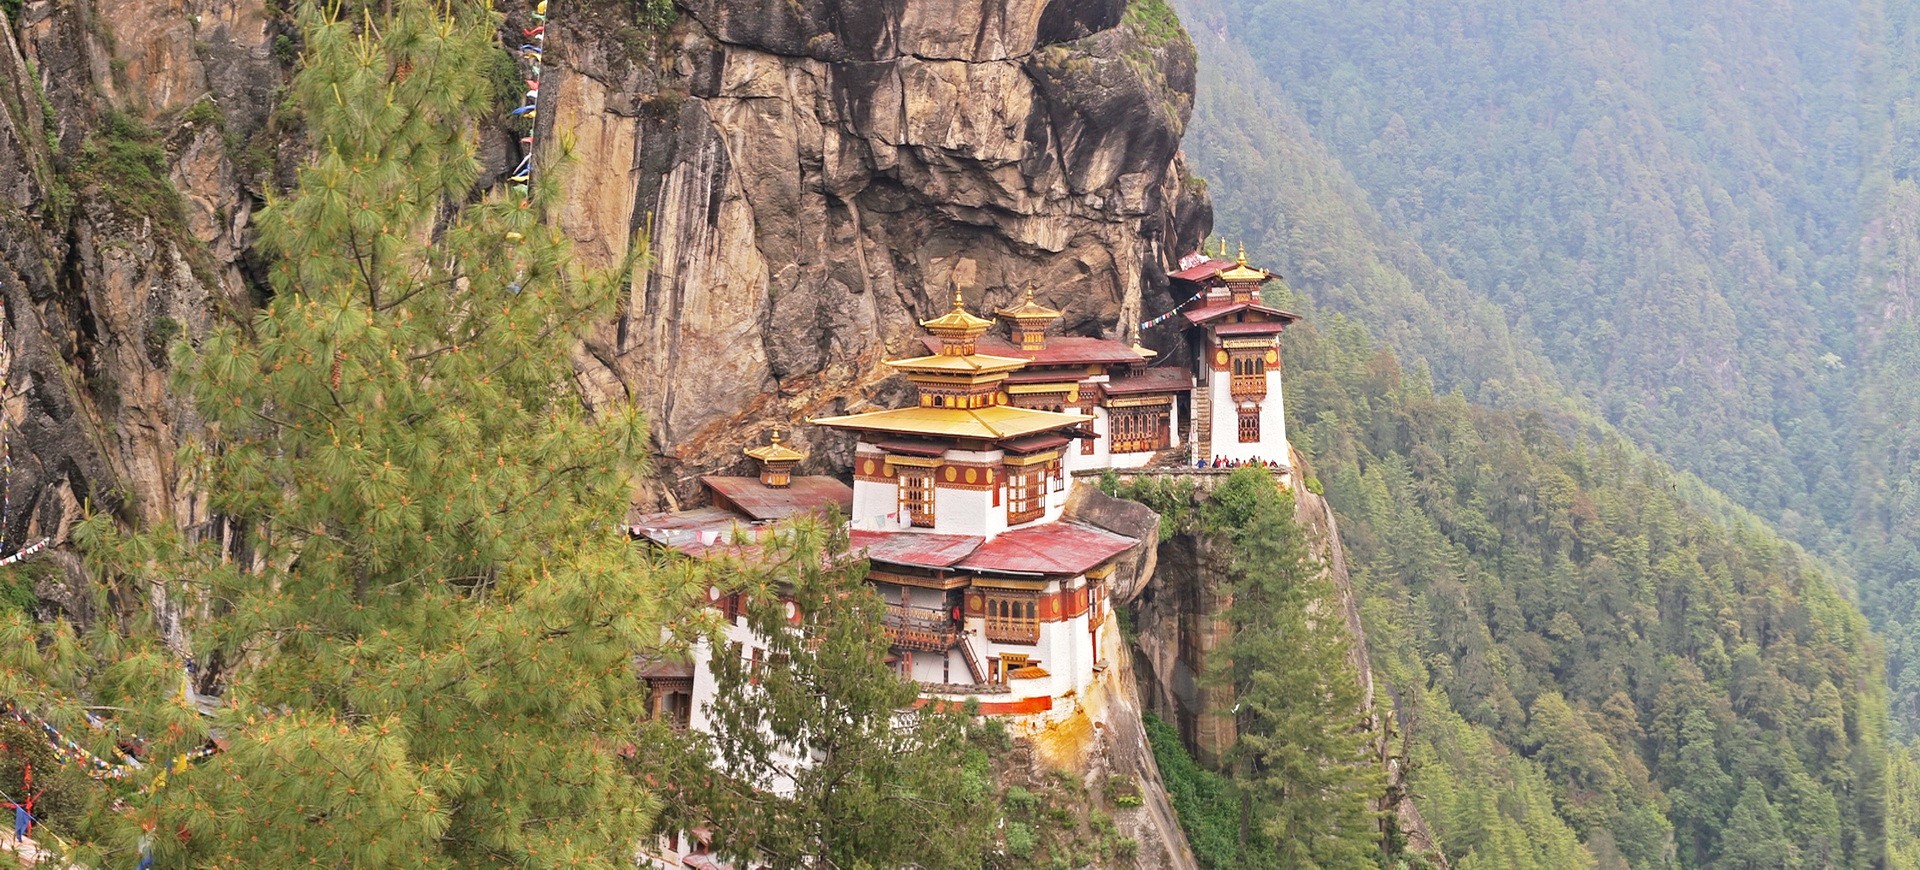 Bhoutan Taktshang monastère